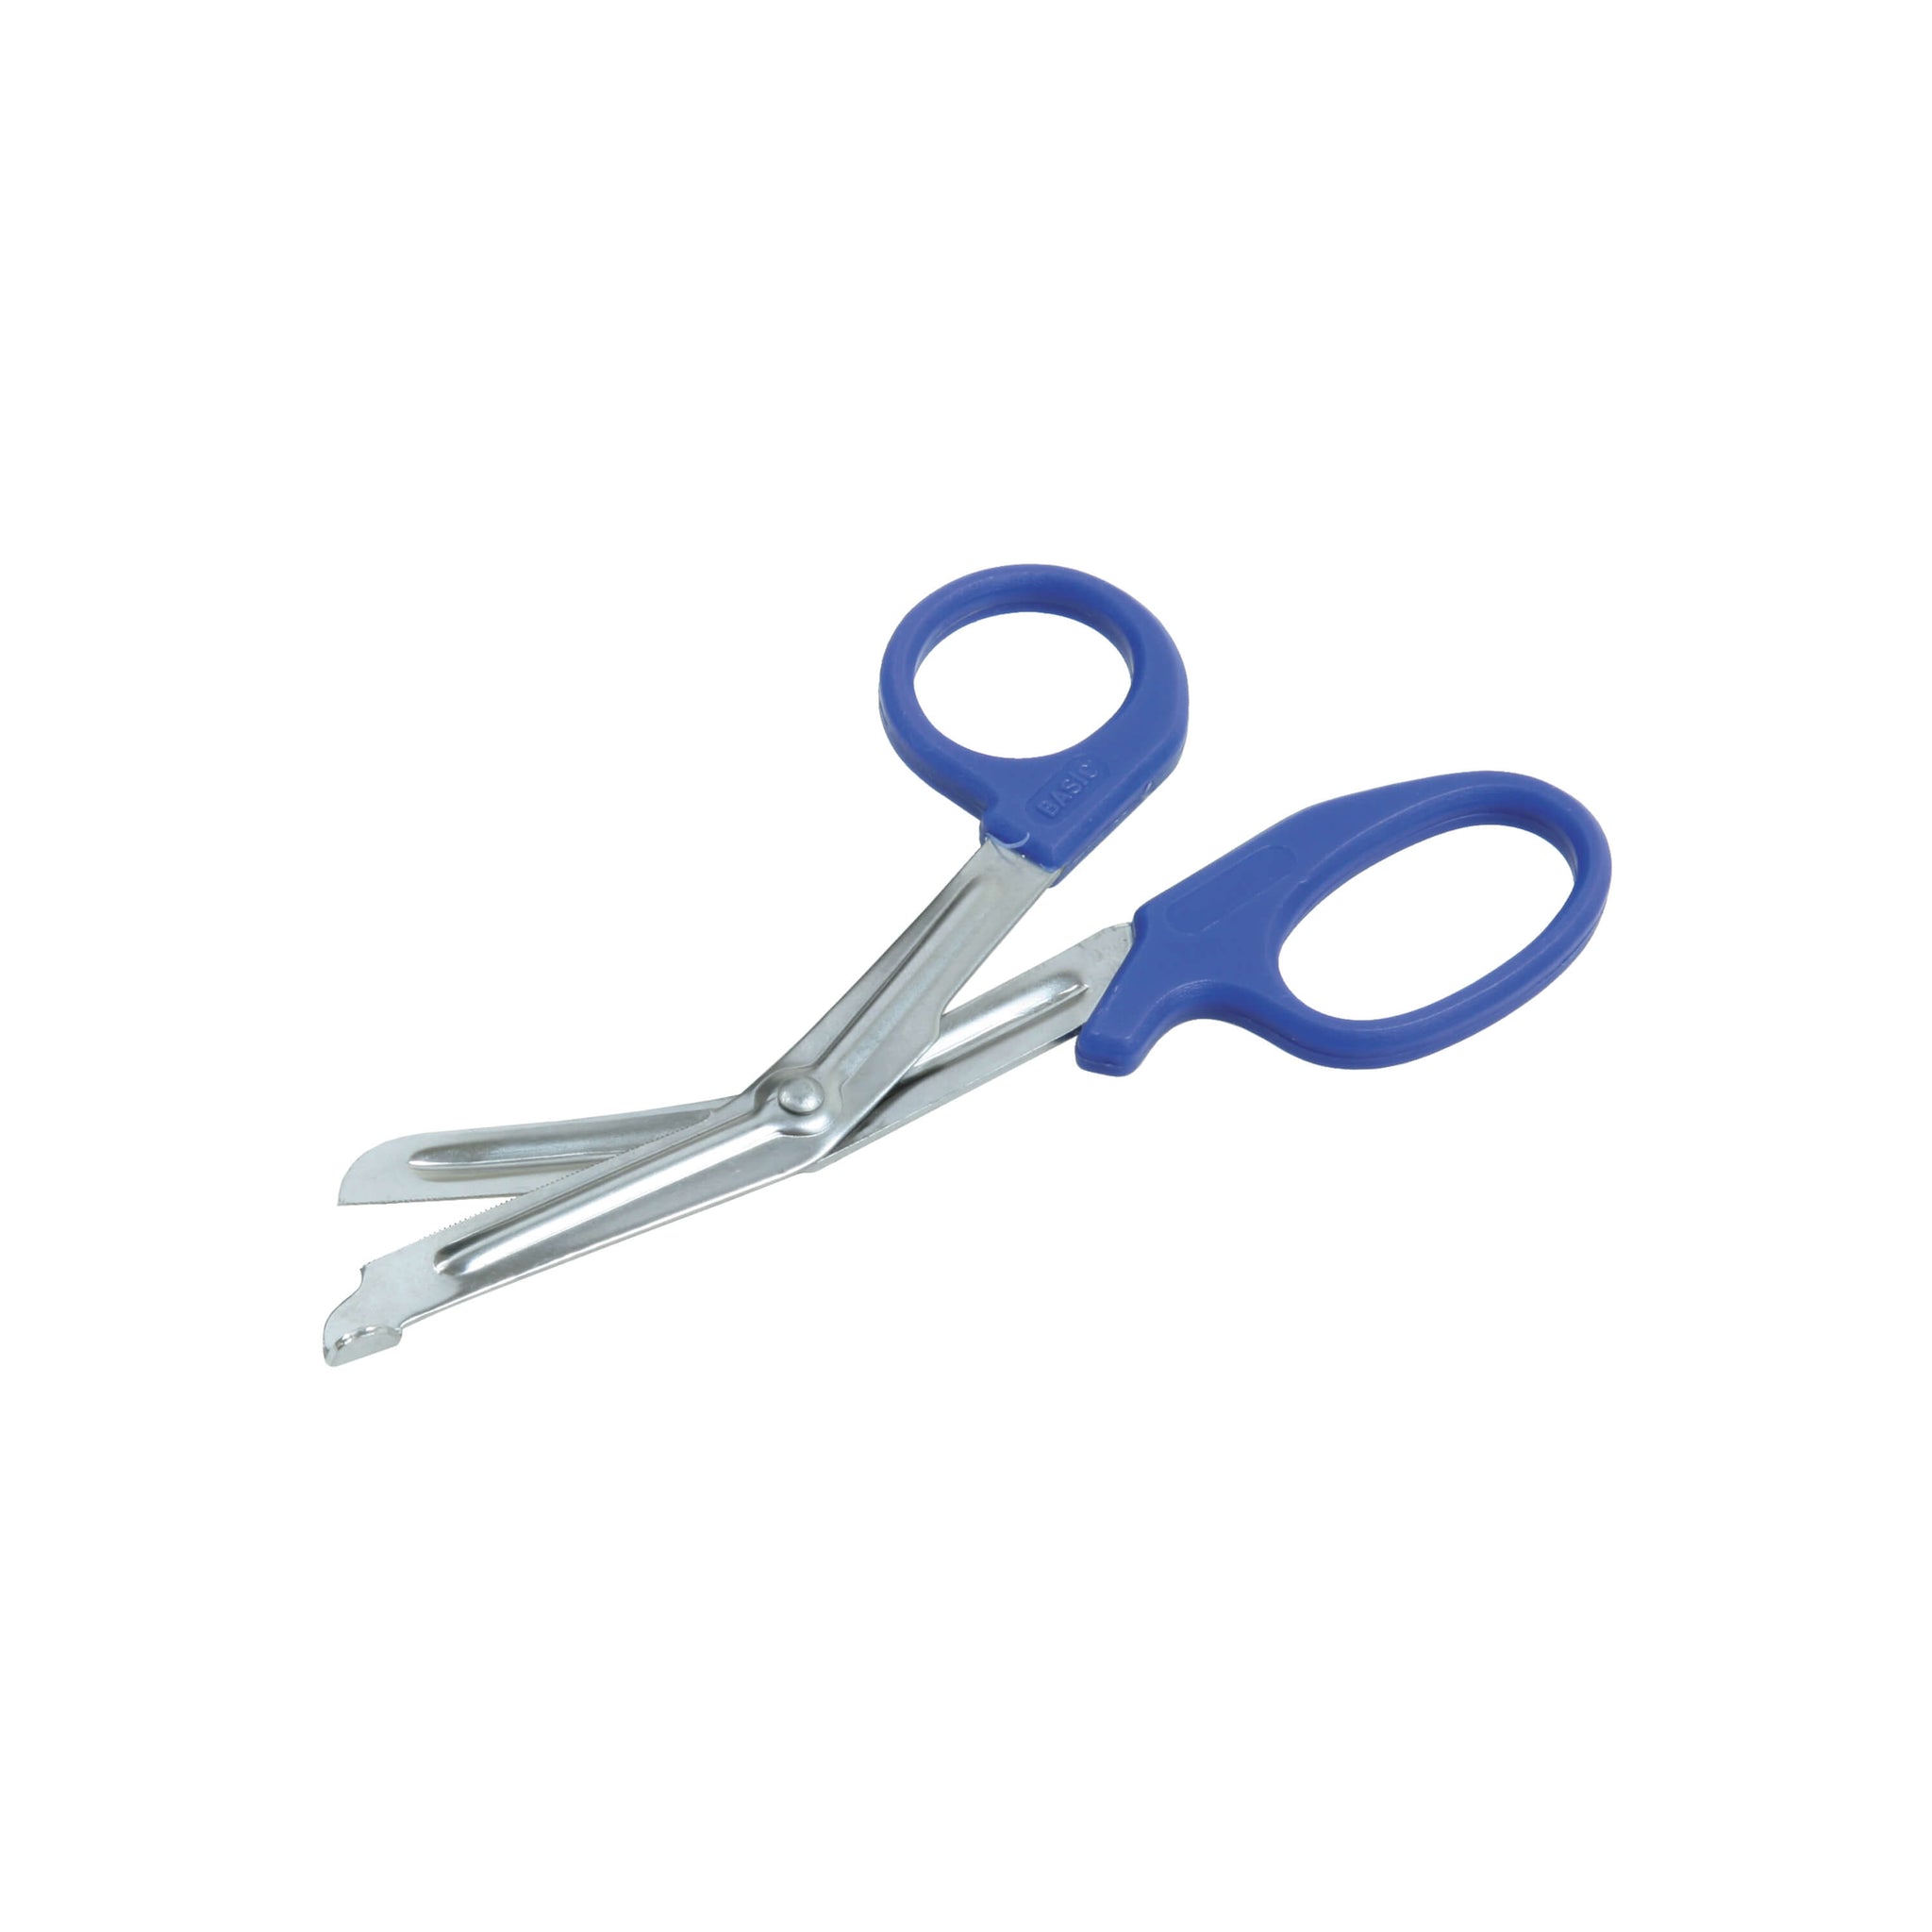 Basic Universal Scissors- Royal Blue, 14 cm